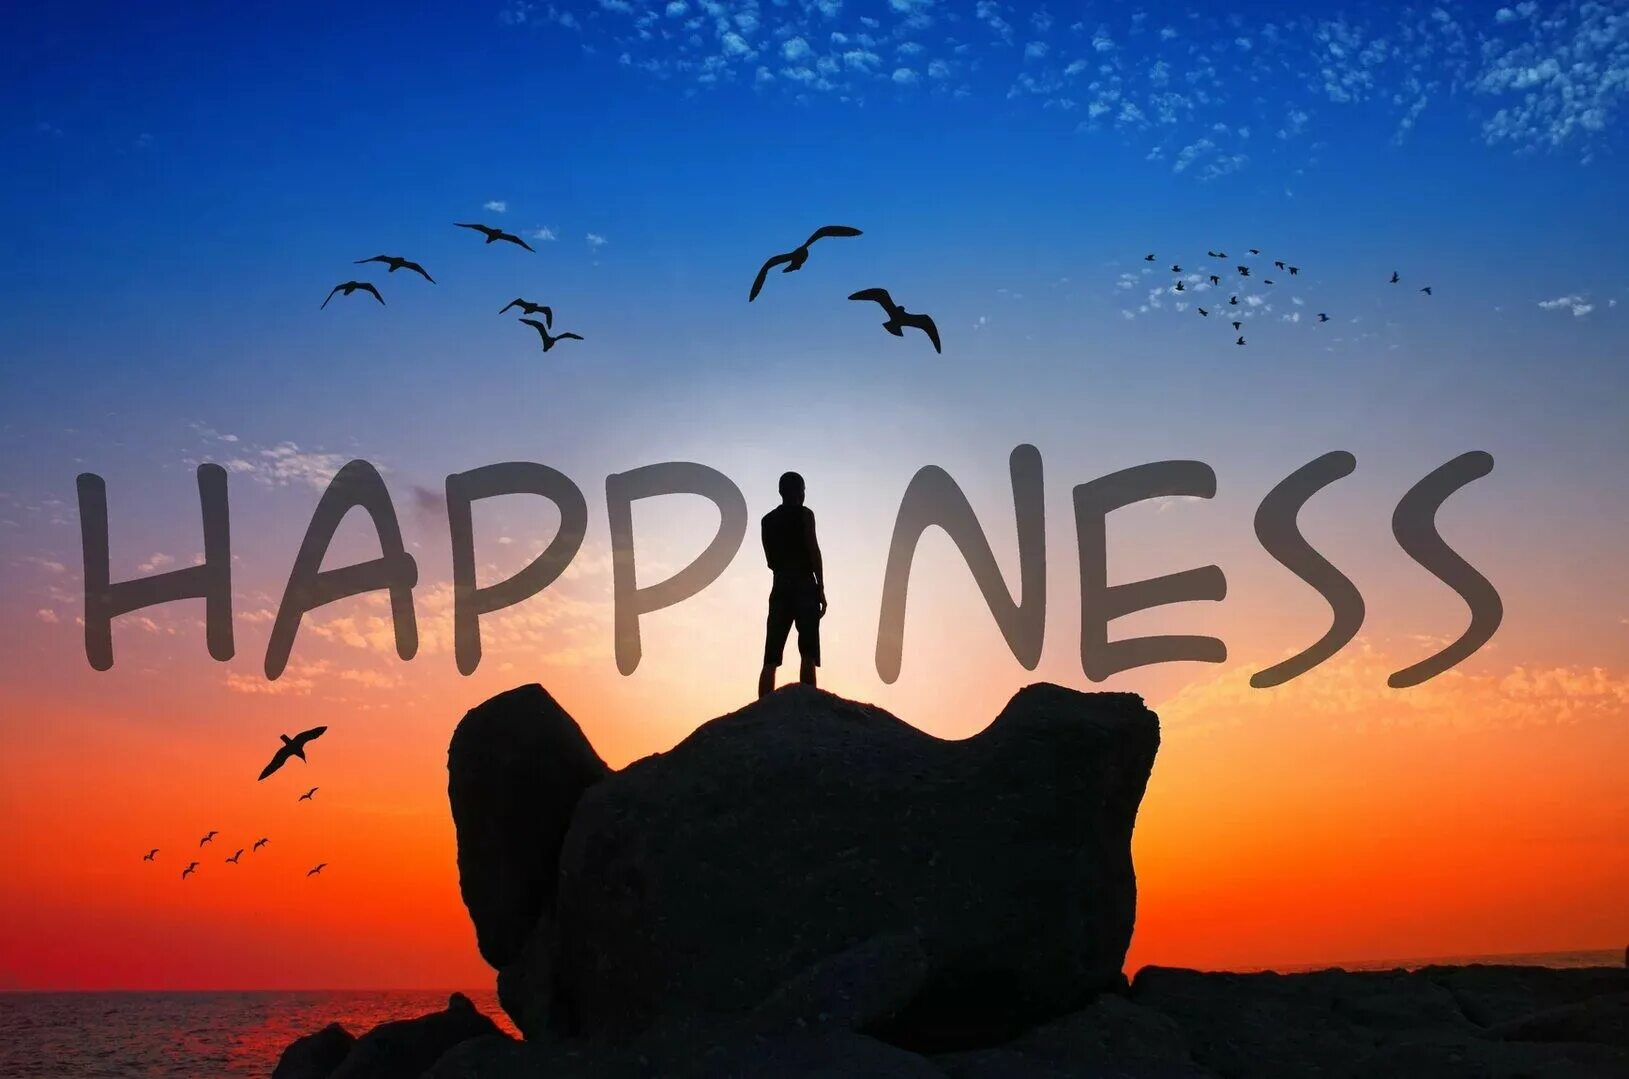 I am happy man. Happiness картинки. Счастье. Happiness картинка для презентации. Изображение счастья.